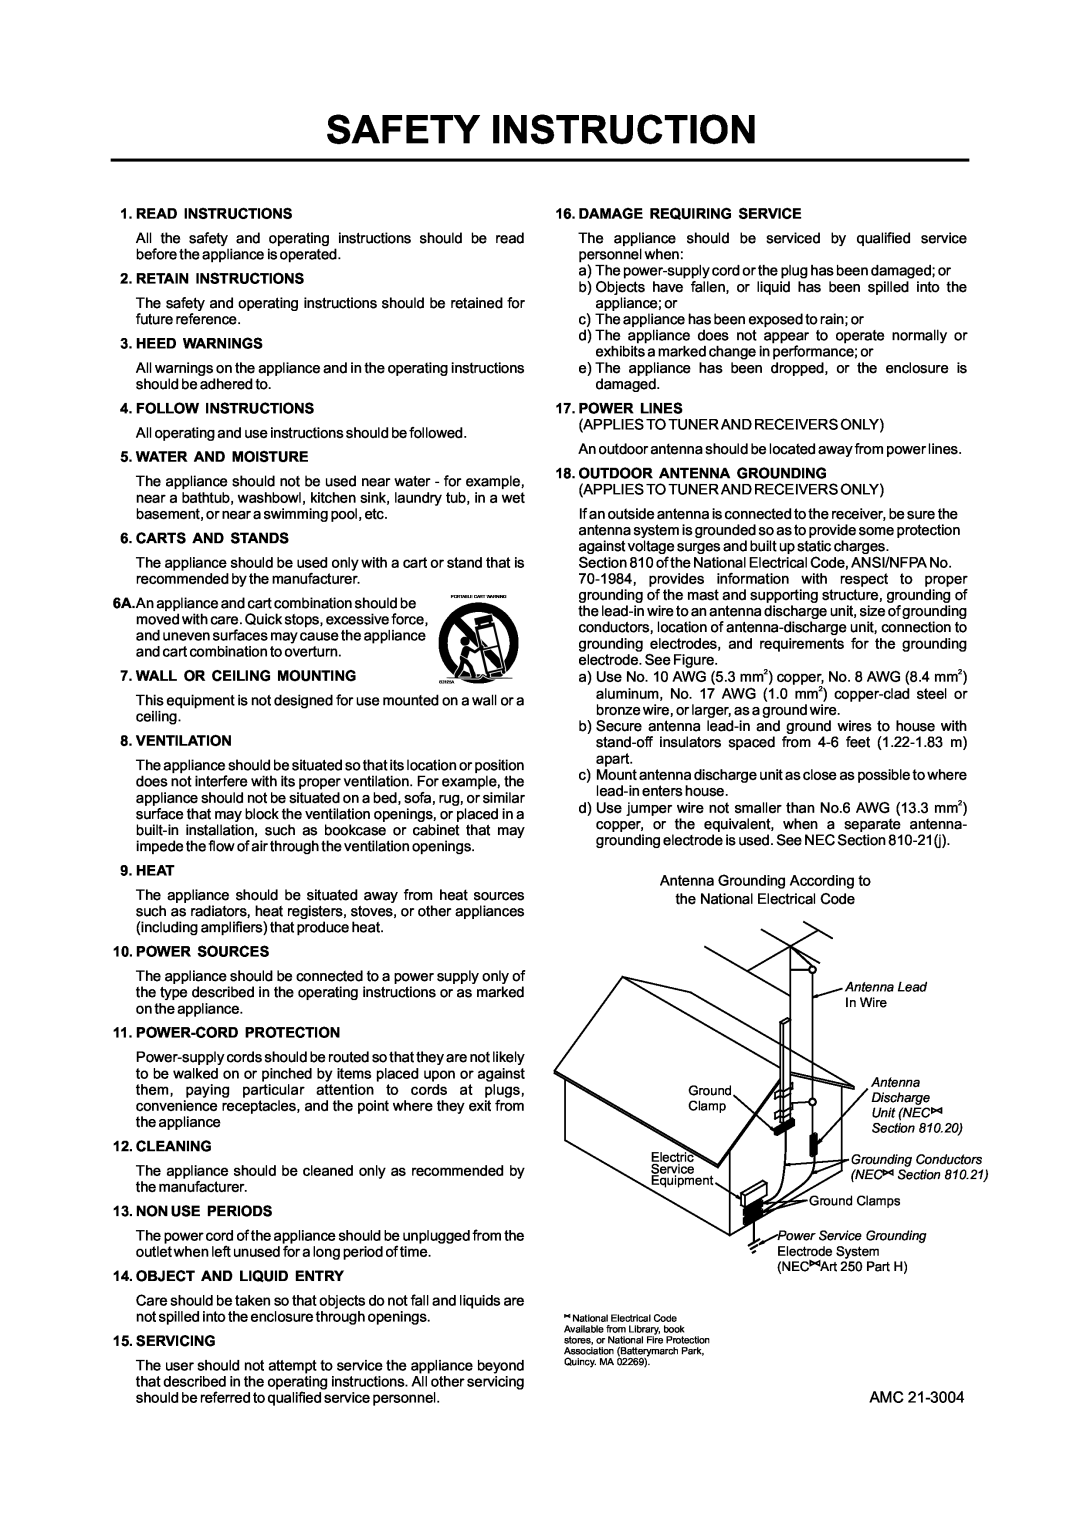 AMC 2445 manual Read Instructions 